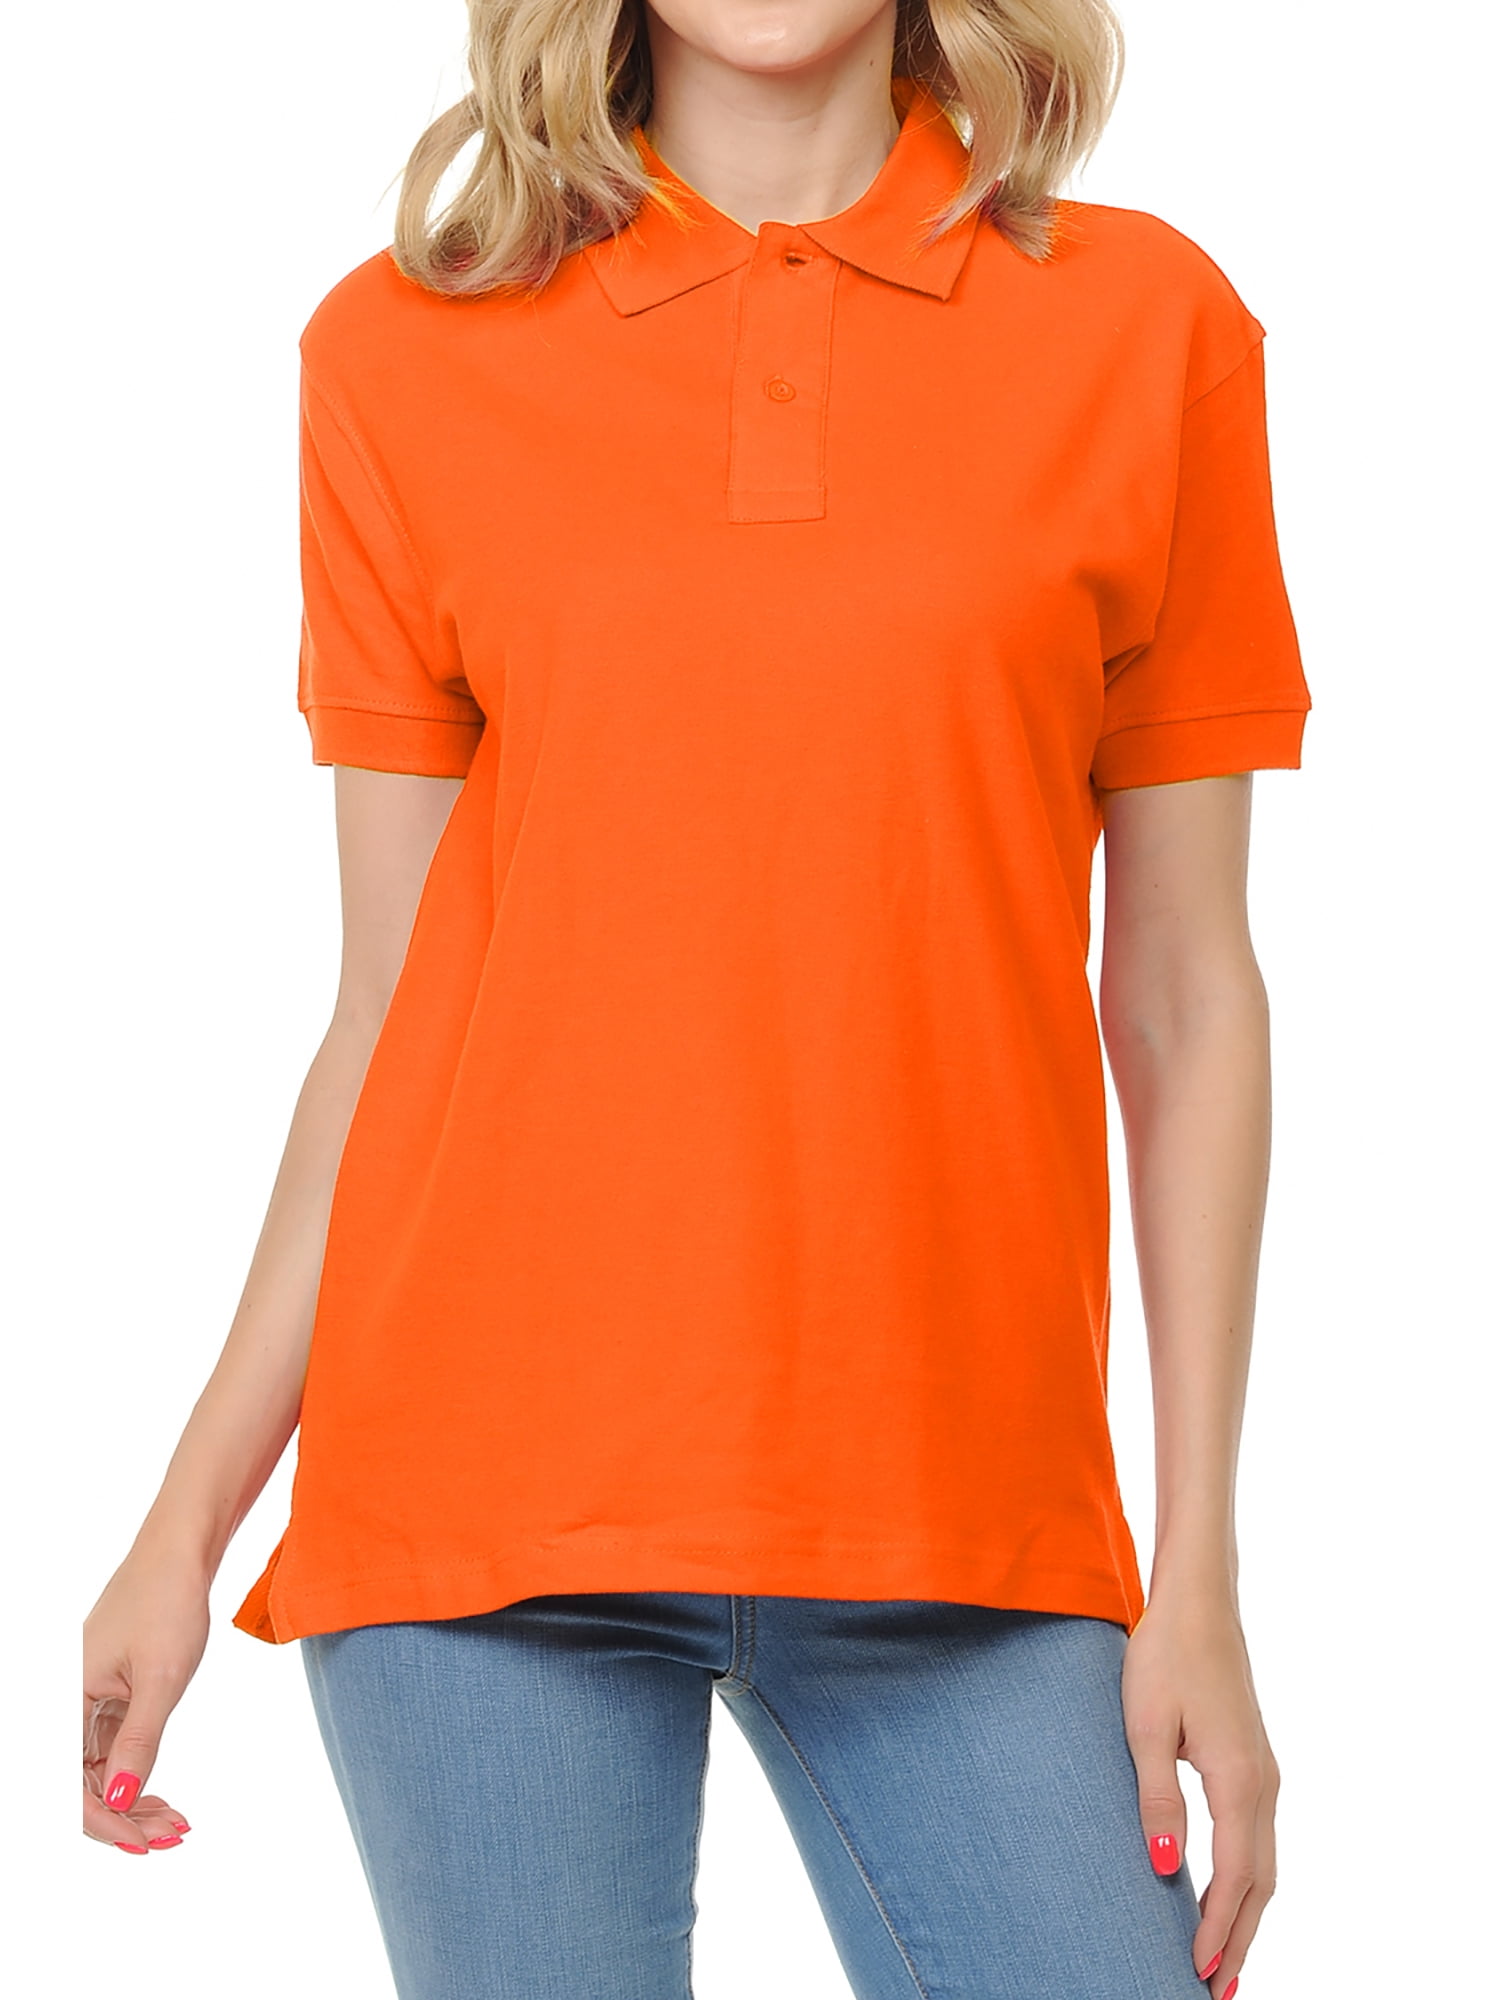 polo shirts orange